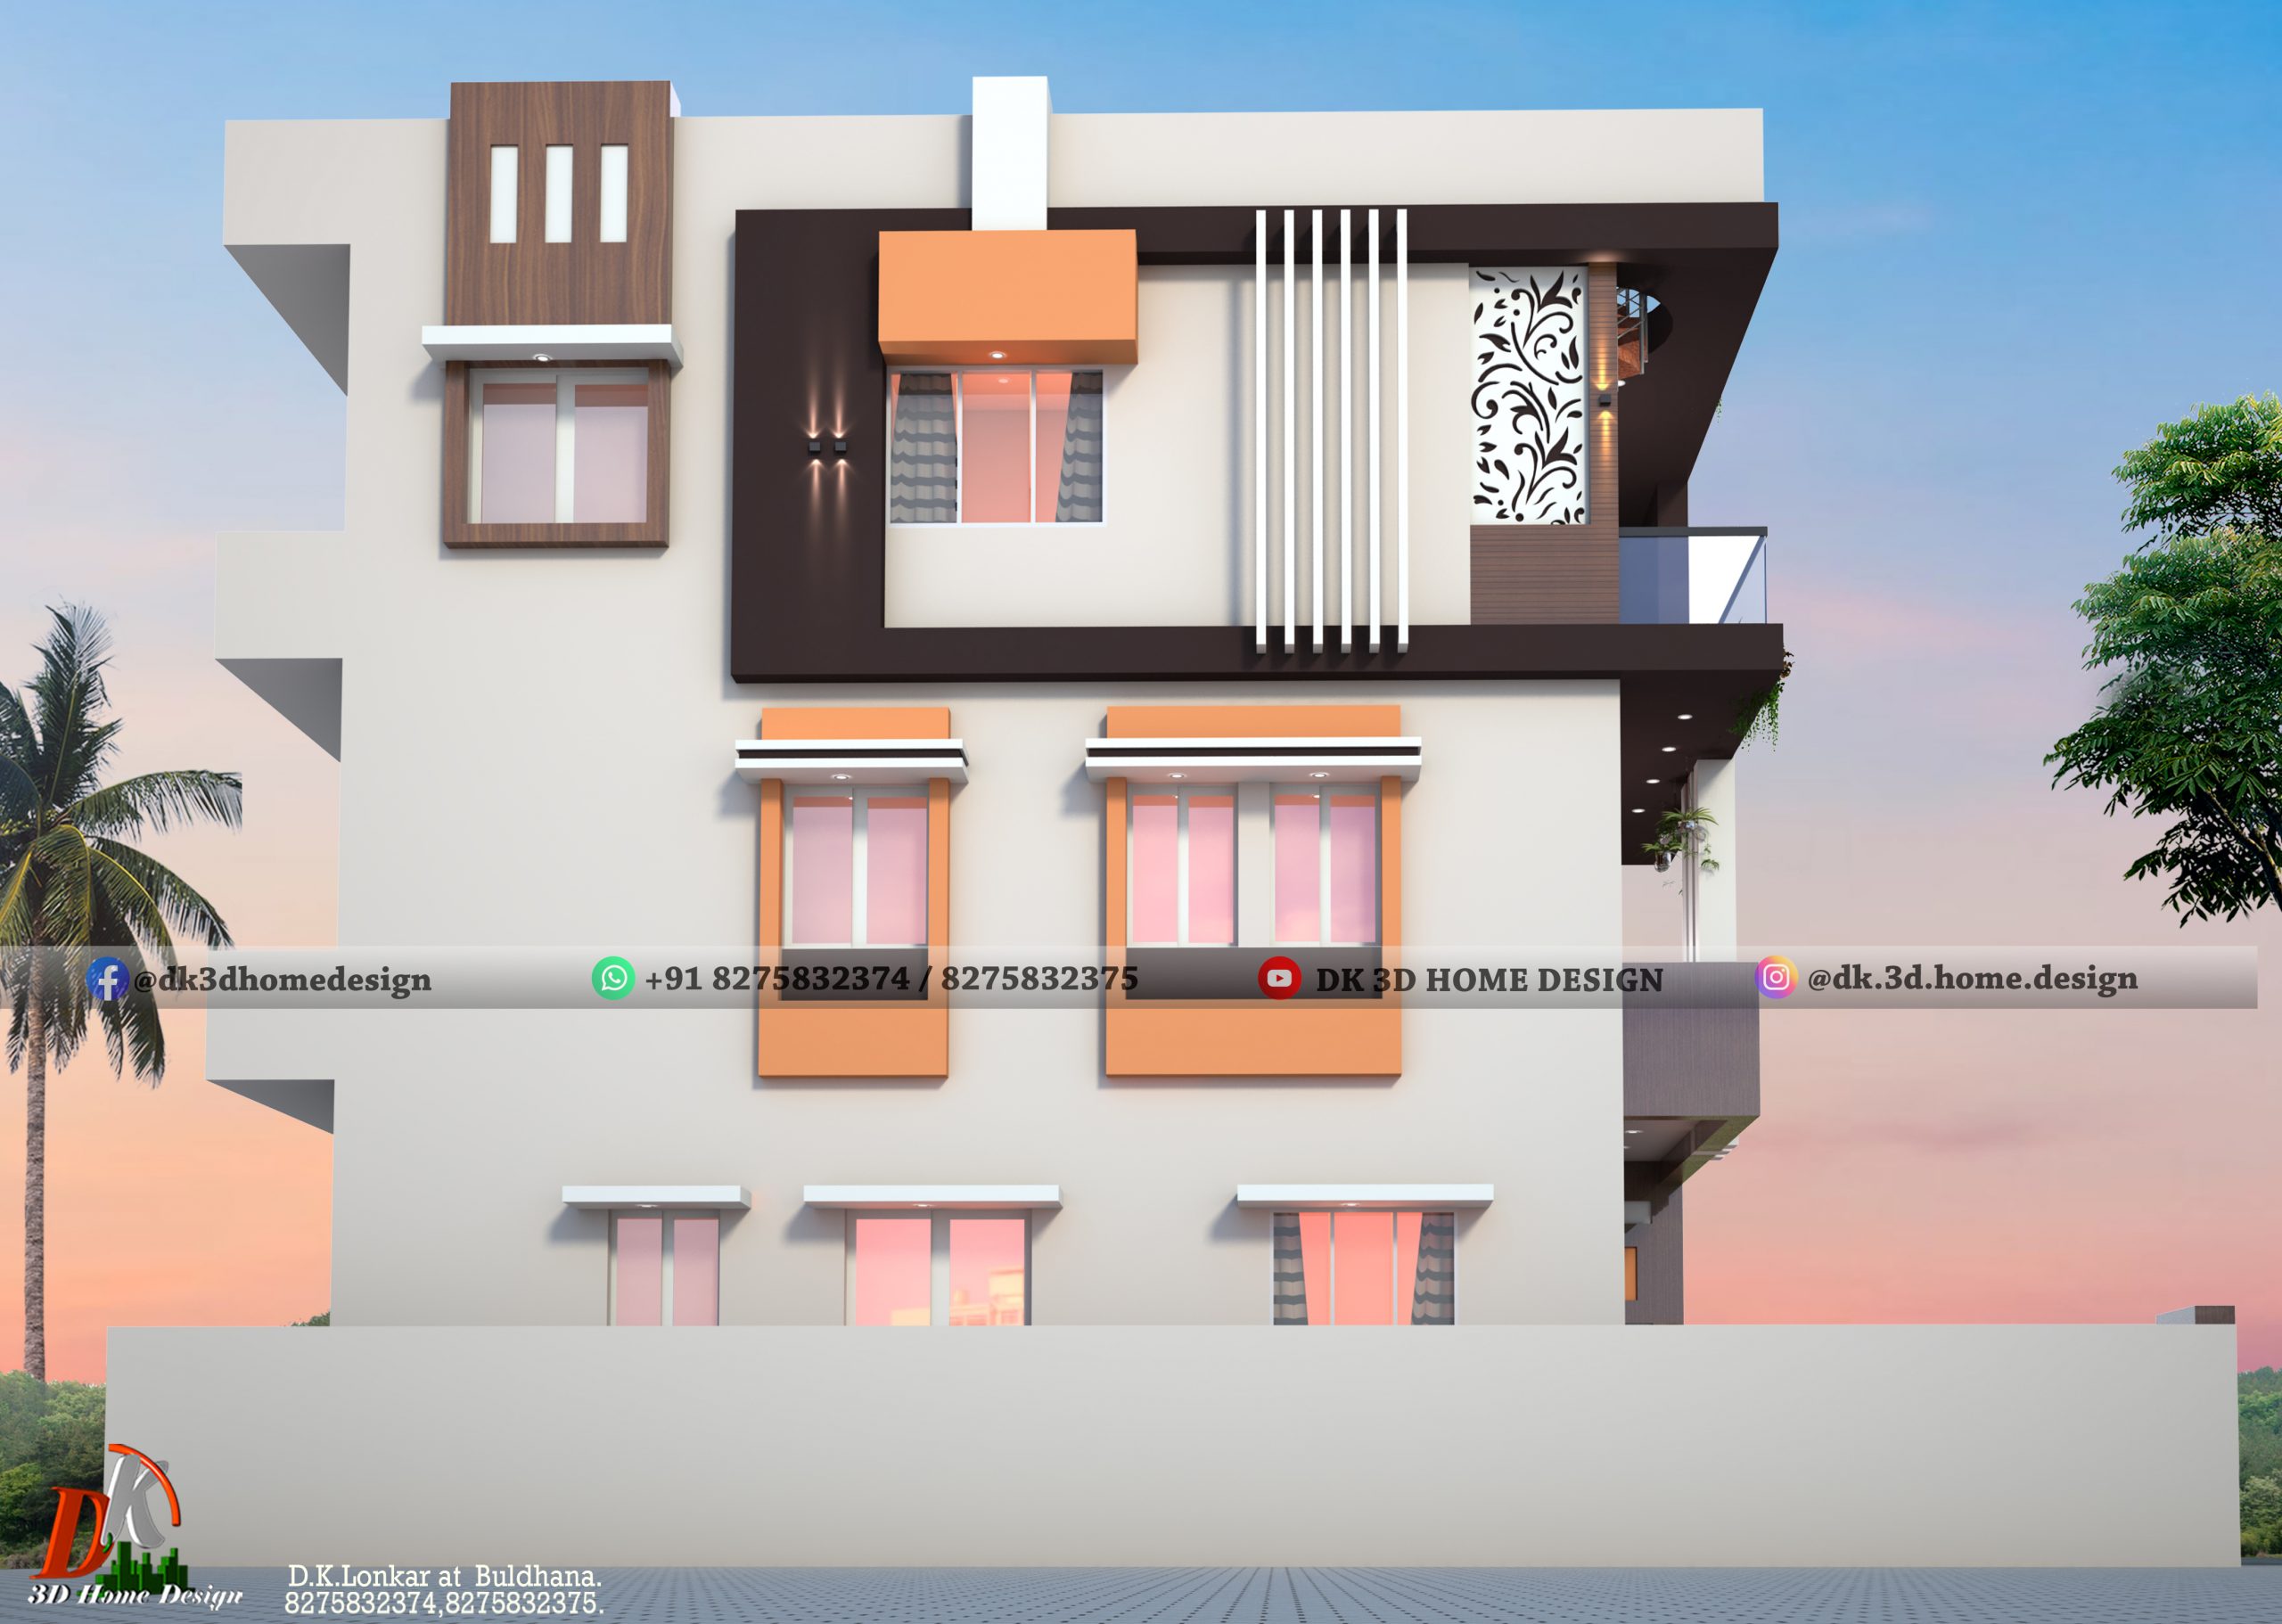 g+2 house design